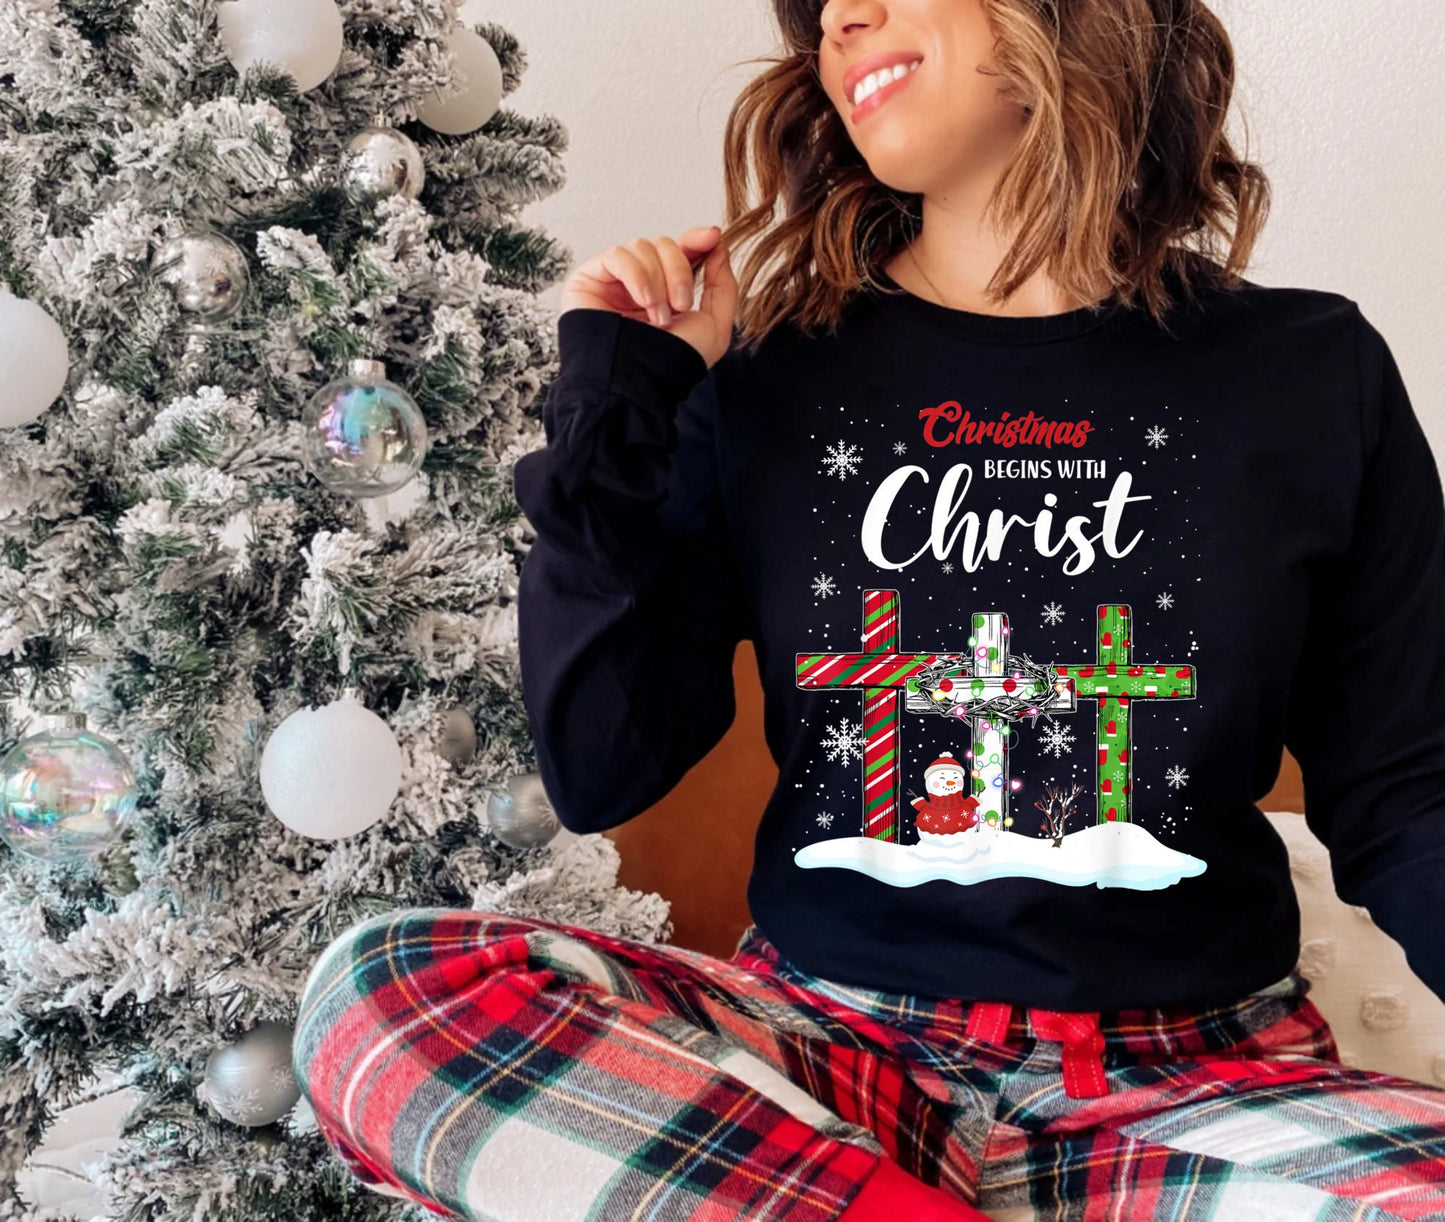 Christmas Begins with Christ Sweatshirt, Merry Christmas, Christmas Sweatshirt, Holiday Party, Christian Sweatshirt, Scripture Sweatshirt